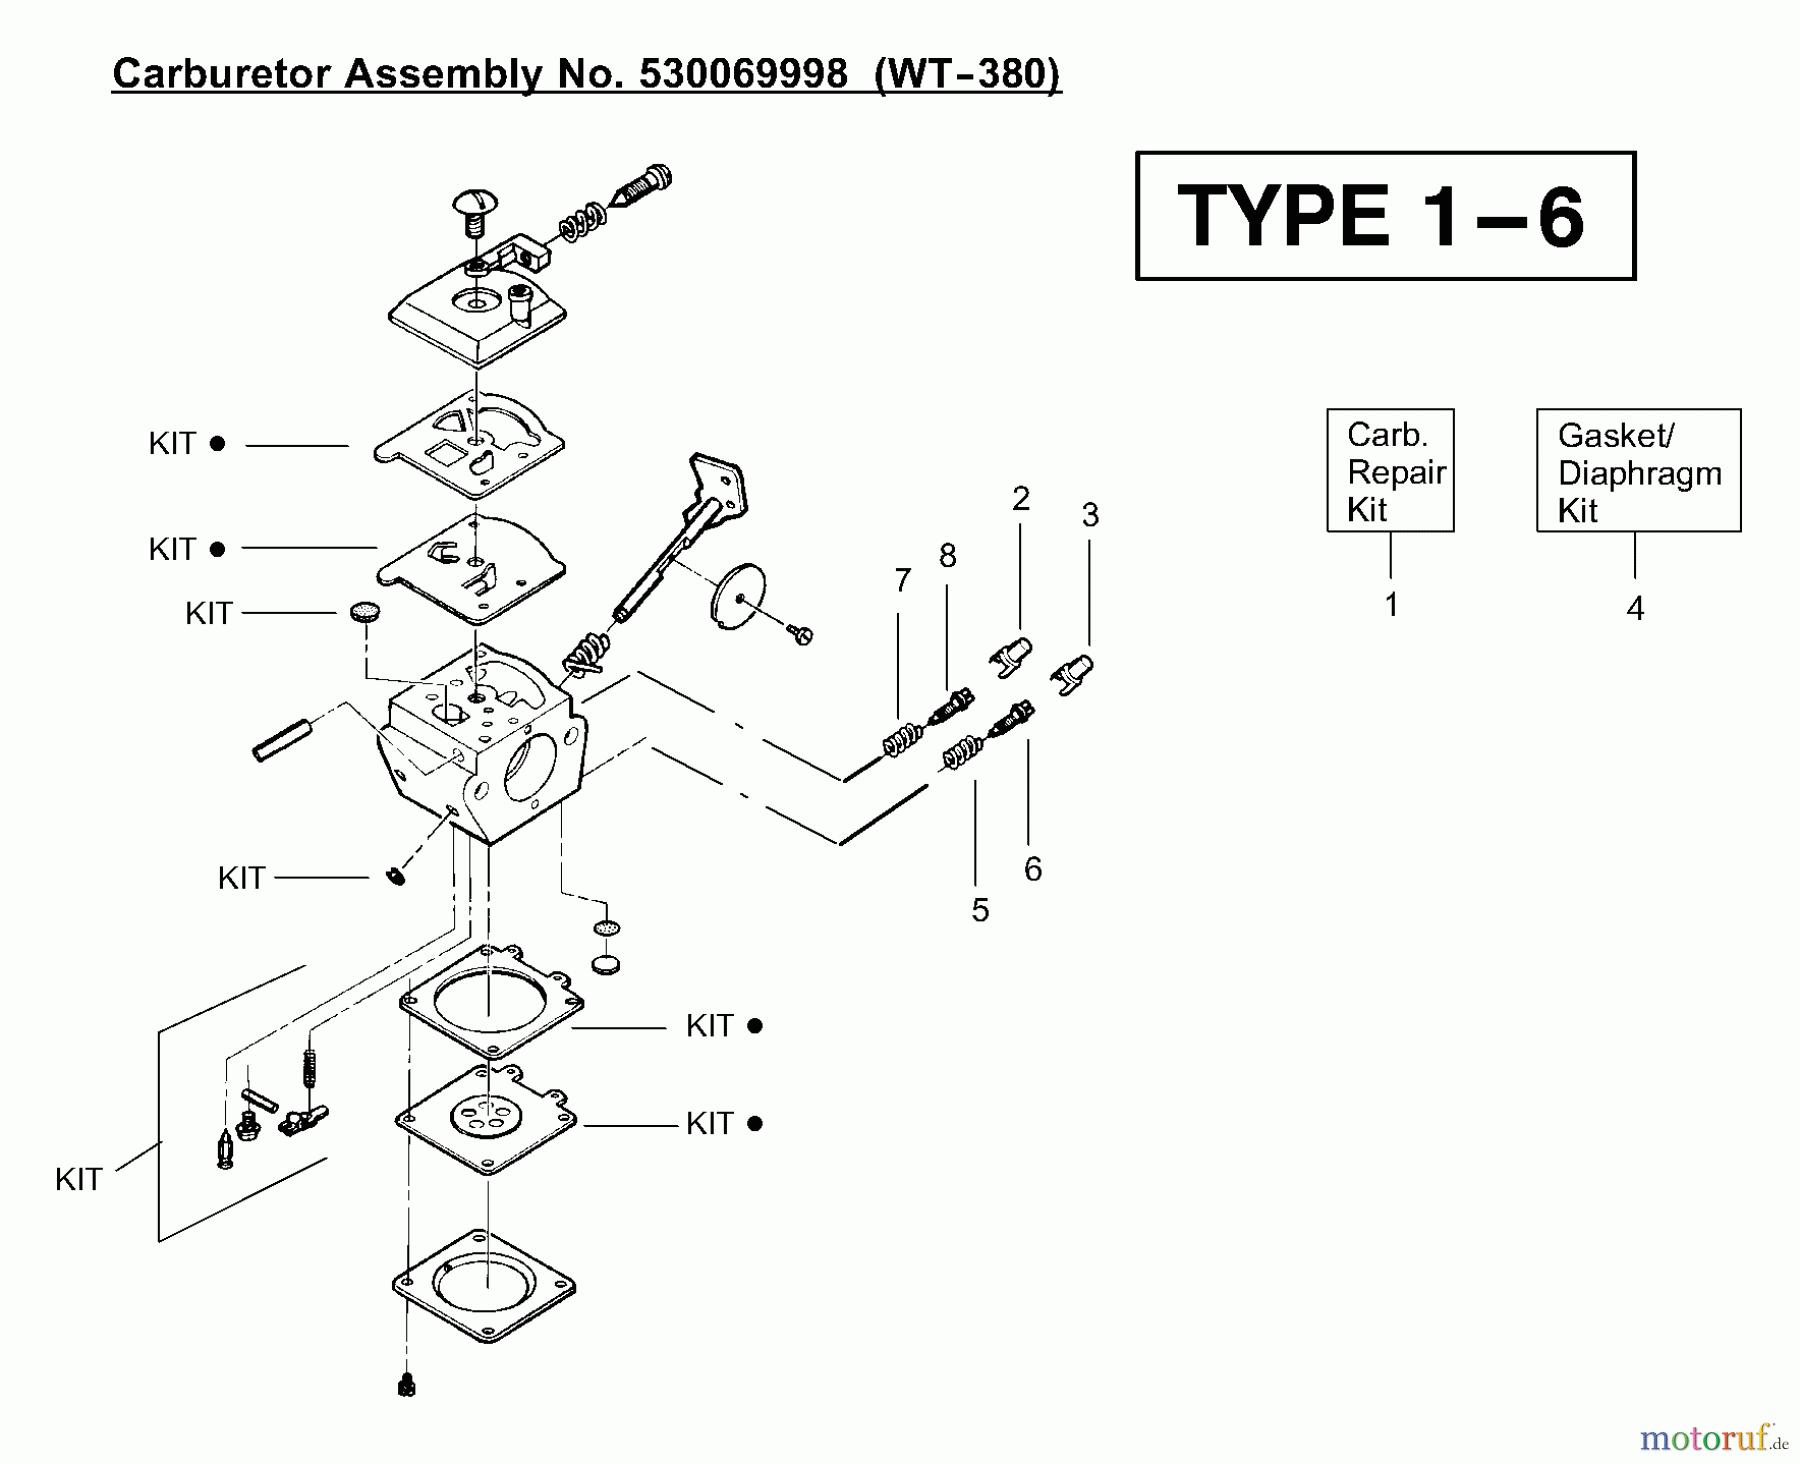  Poulan / Weed Eater Motorsensen, Trimmer BC2400 (Type 2) - Weed Eater String Trimmer Carburetor Assembly (WT380) 530069998